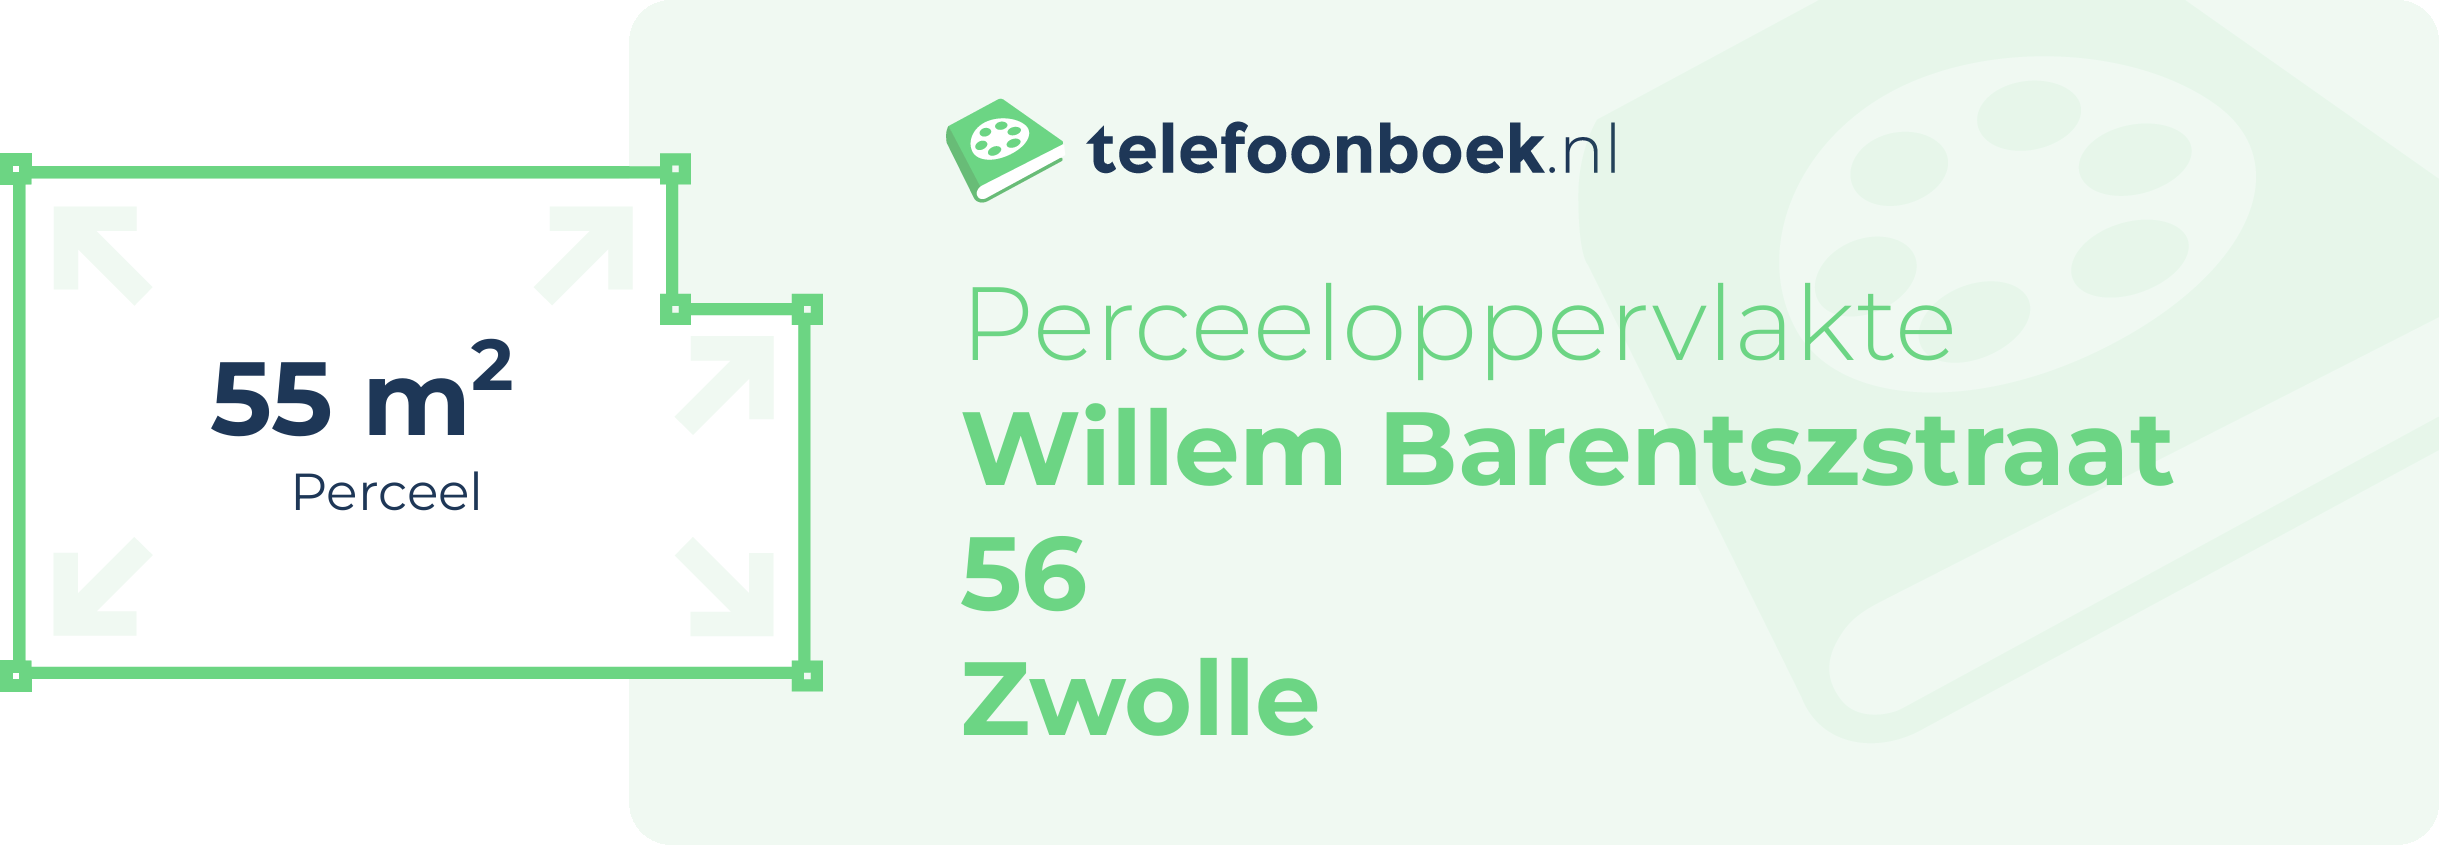 Perceeloppervlakte Willem Barentszstraat 56 Zwolle